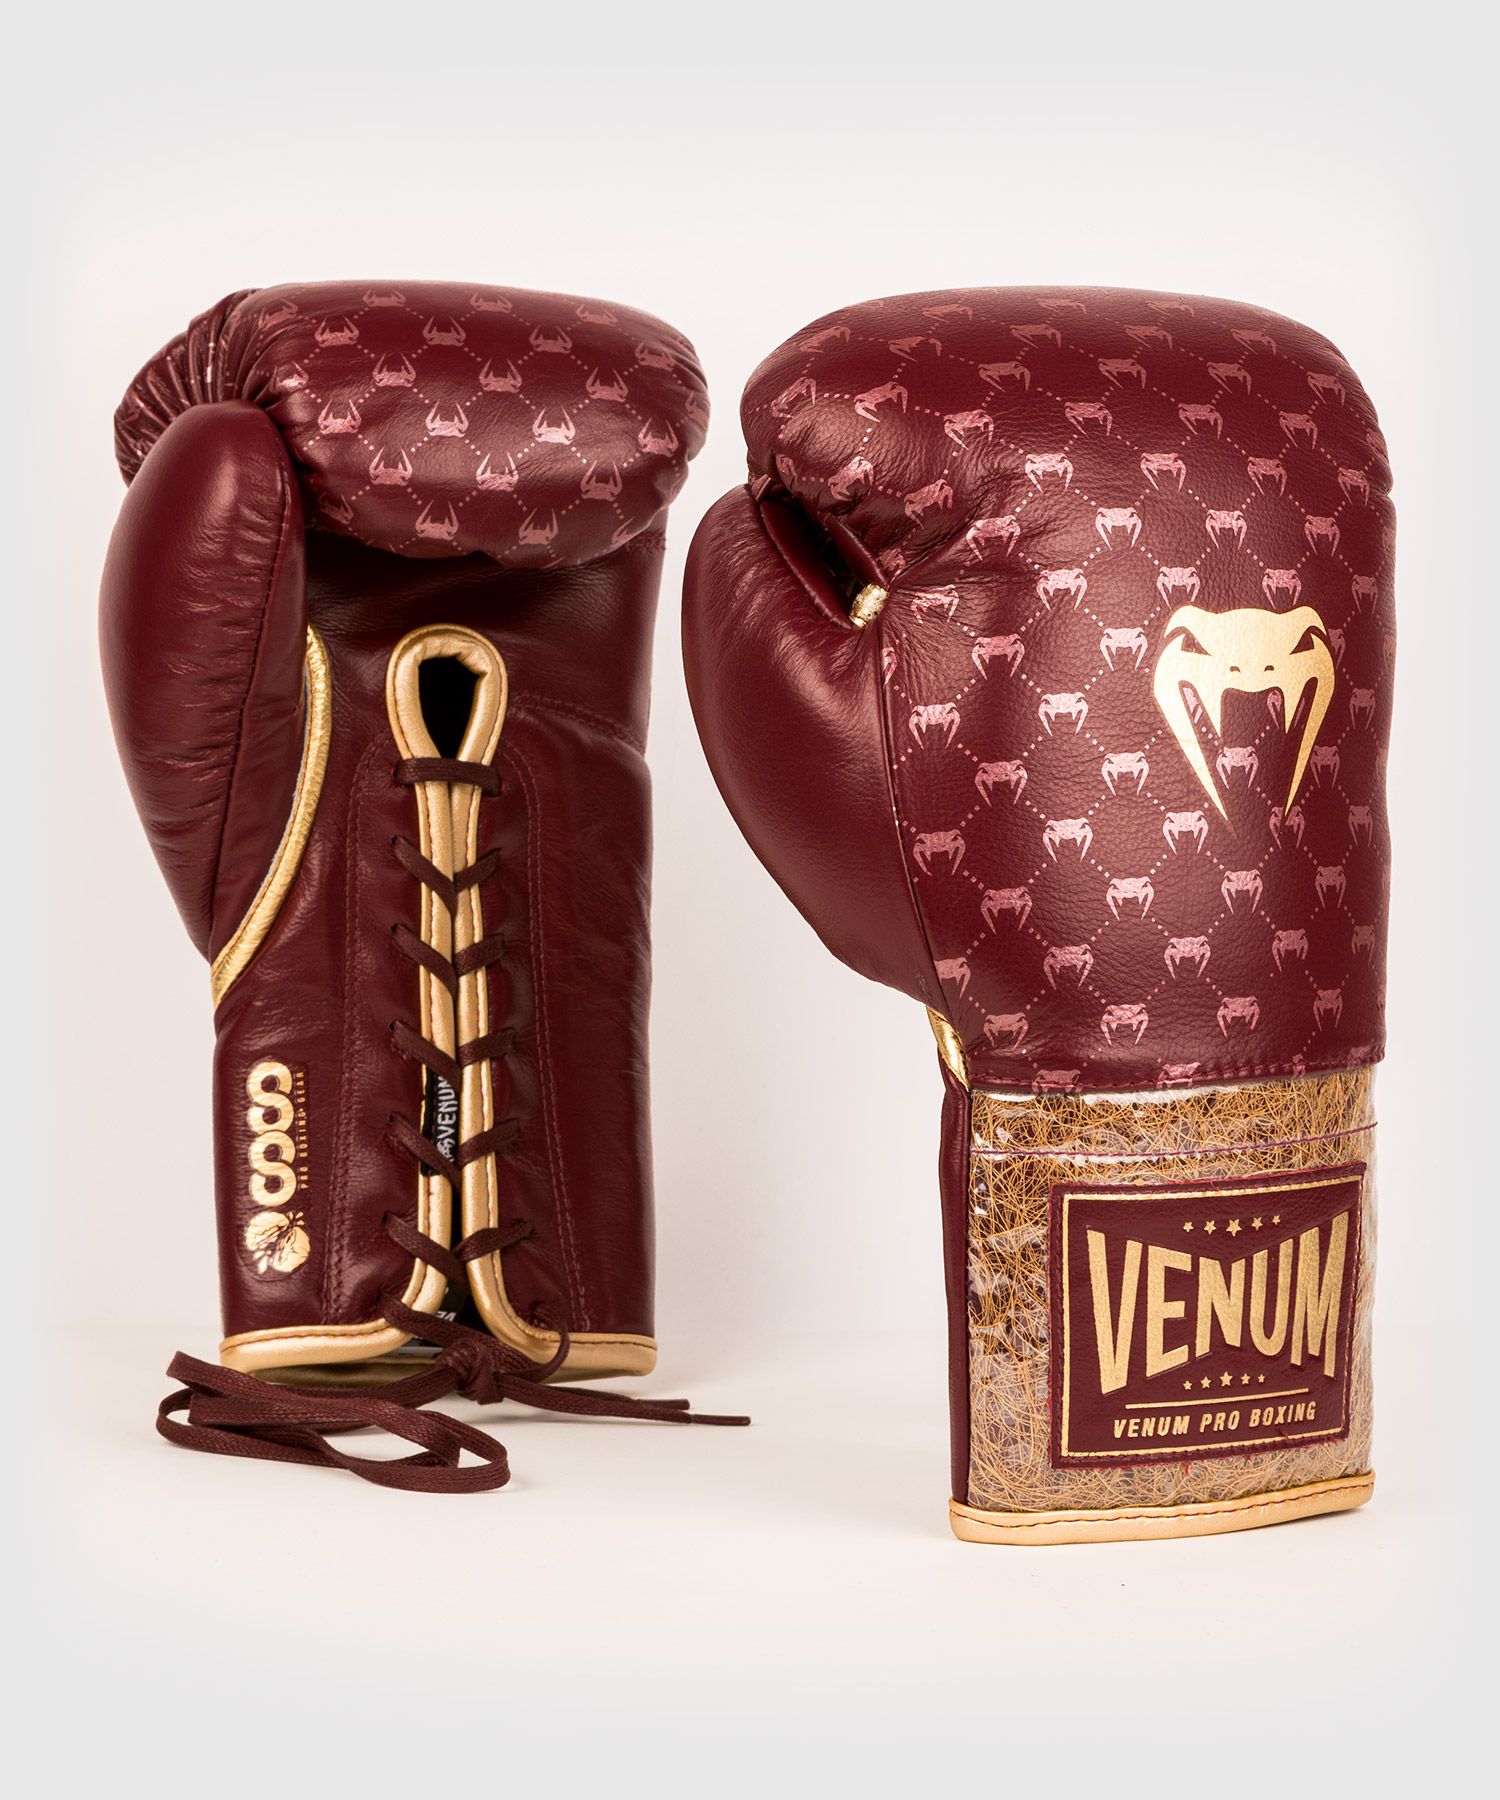 Venum Coco Monogram Pro Lace Up Boxing Gloves - Garnet Red